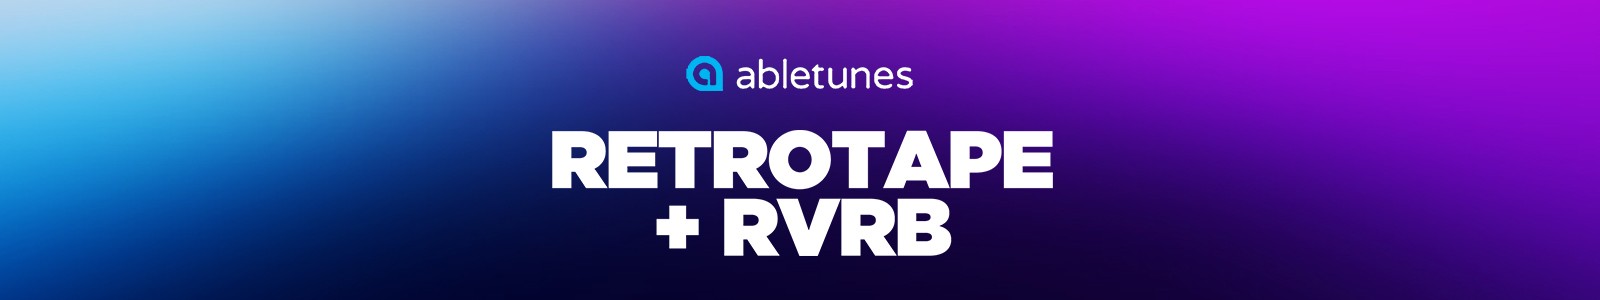 Retrotape & RVRB Plugins Bundle by Abletunes